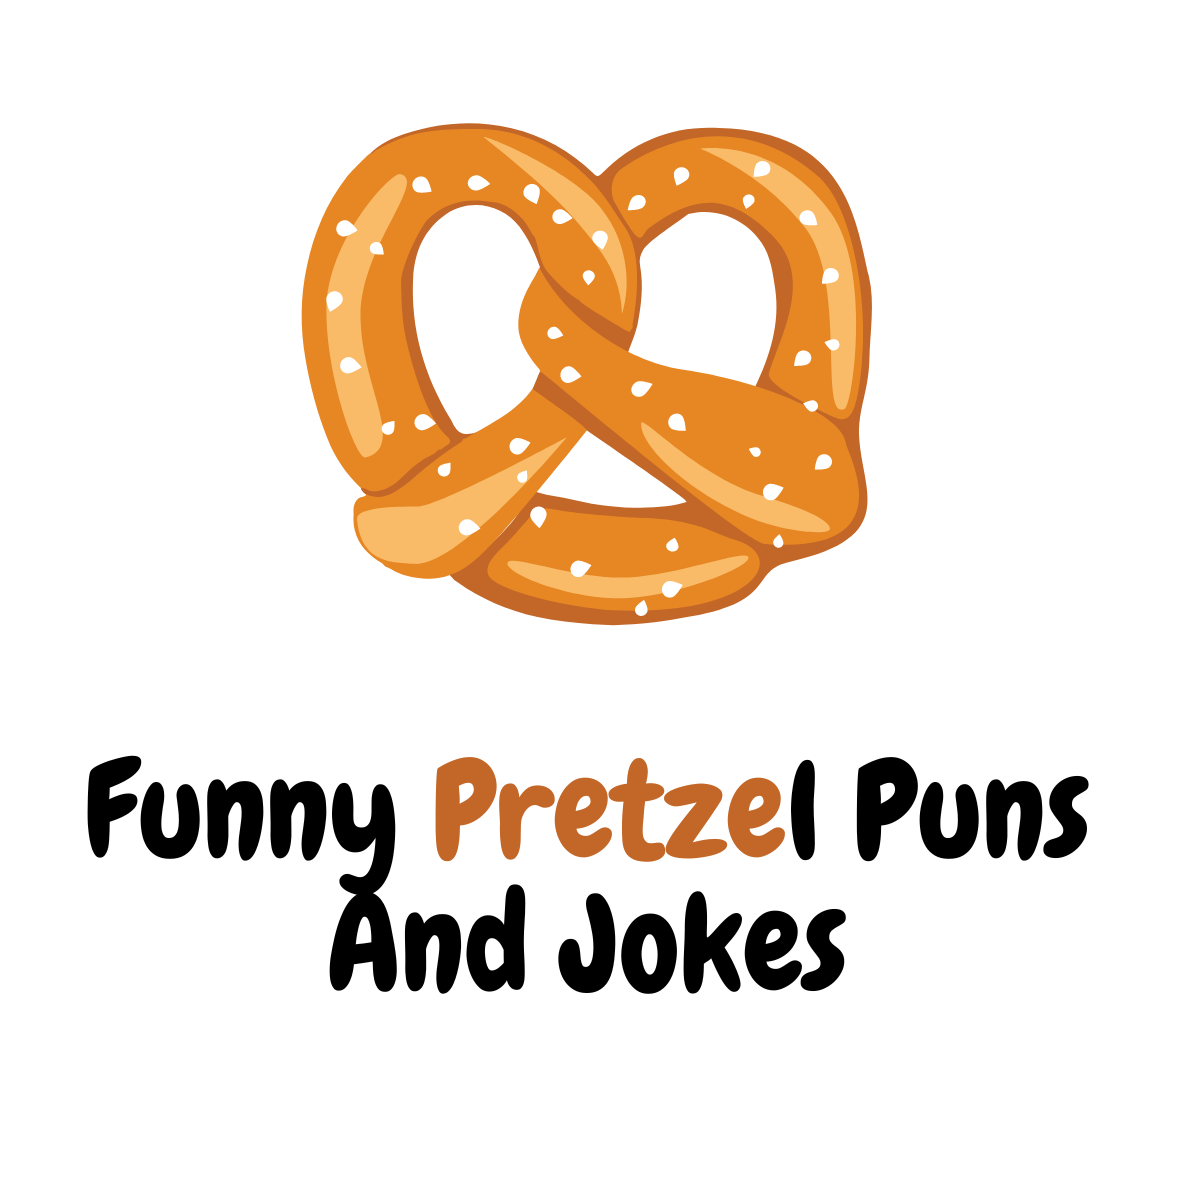 Funny Pretzel Puns And Jokes